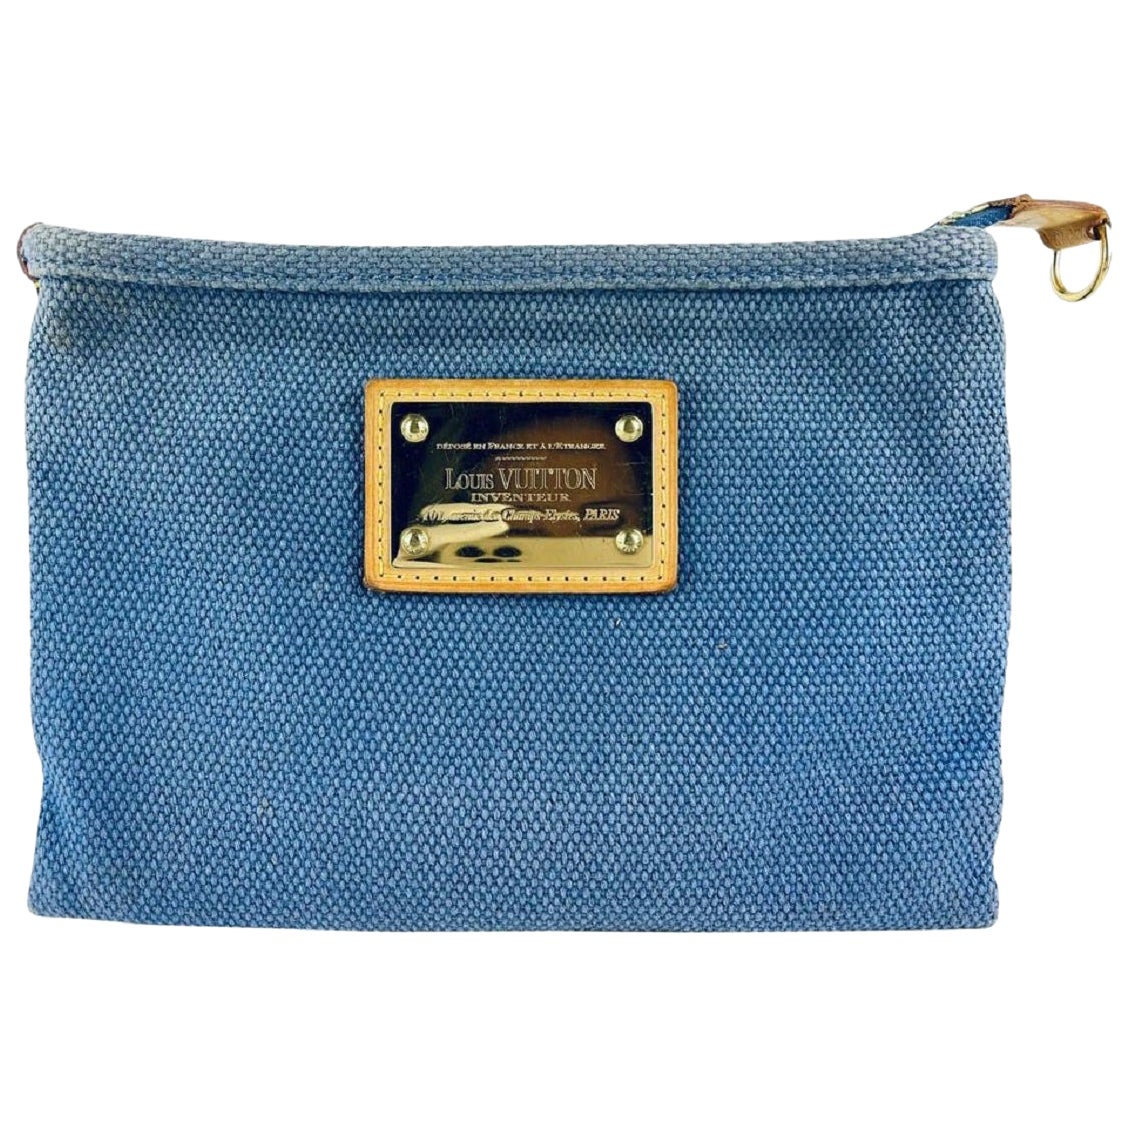 slender wallet 76lk67s